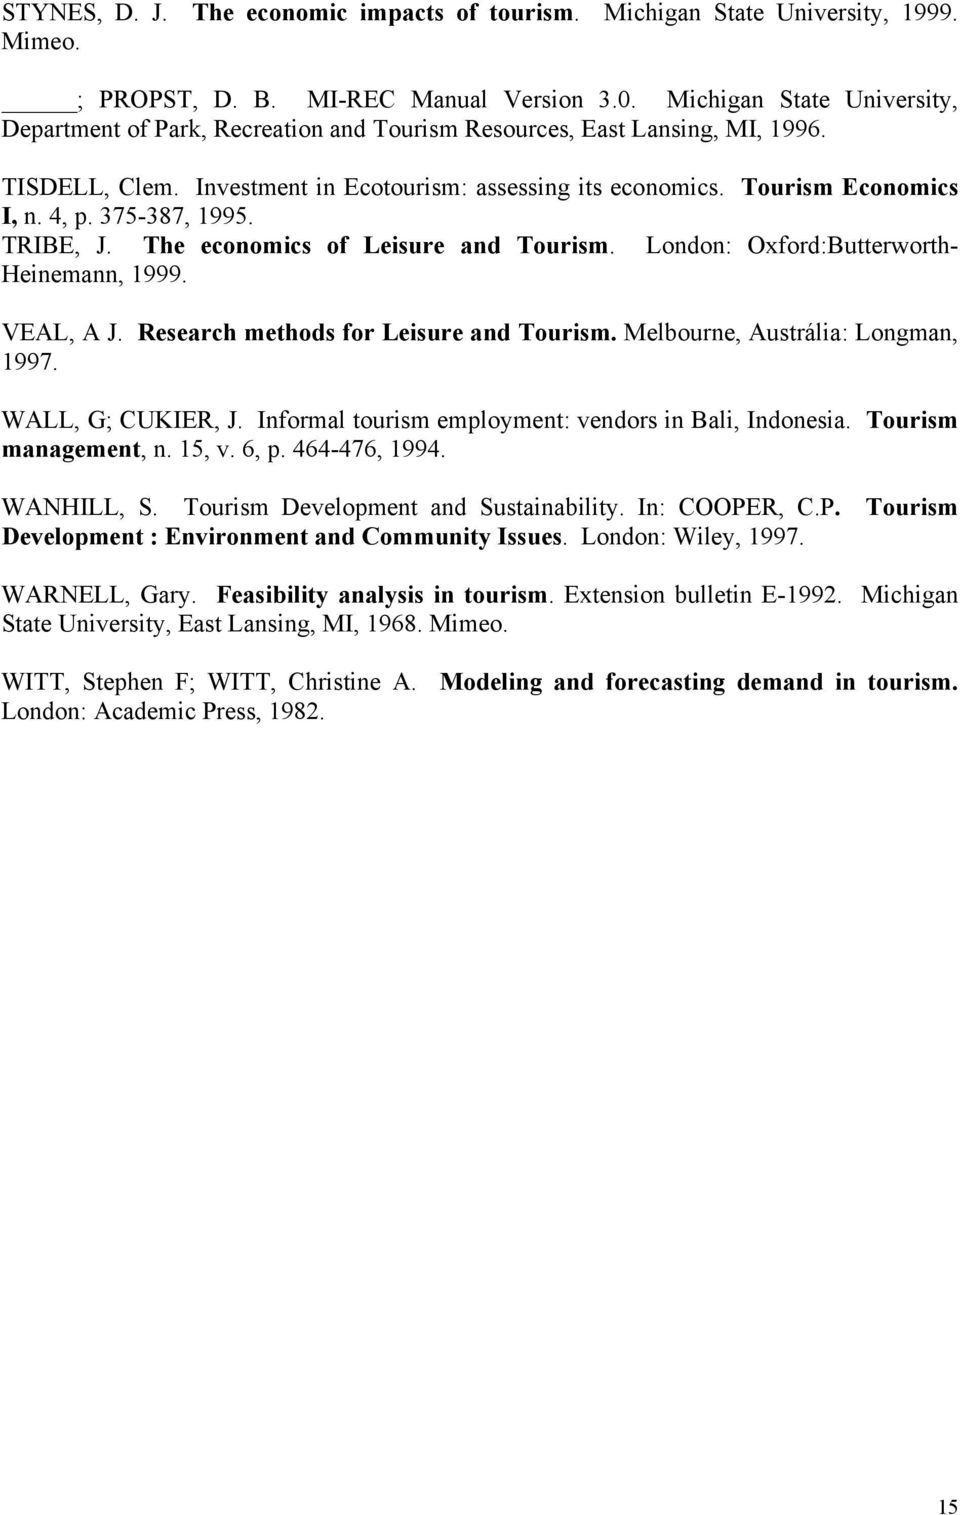 375-387, 1995. TRIBE, J. The economics of Leisure and Tourism. London: Oxford:Butterworth- Heinemann, 1999. VEAL, A J. Research methods for Leisure and Tourism. Melbourne, Austrália: Longman, 1997.